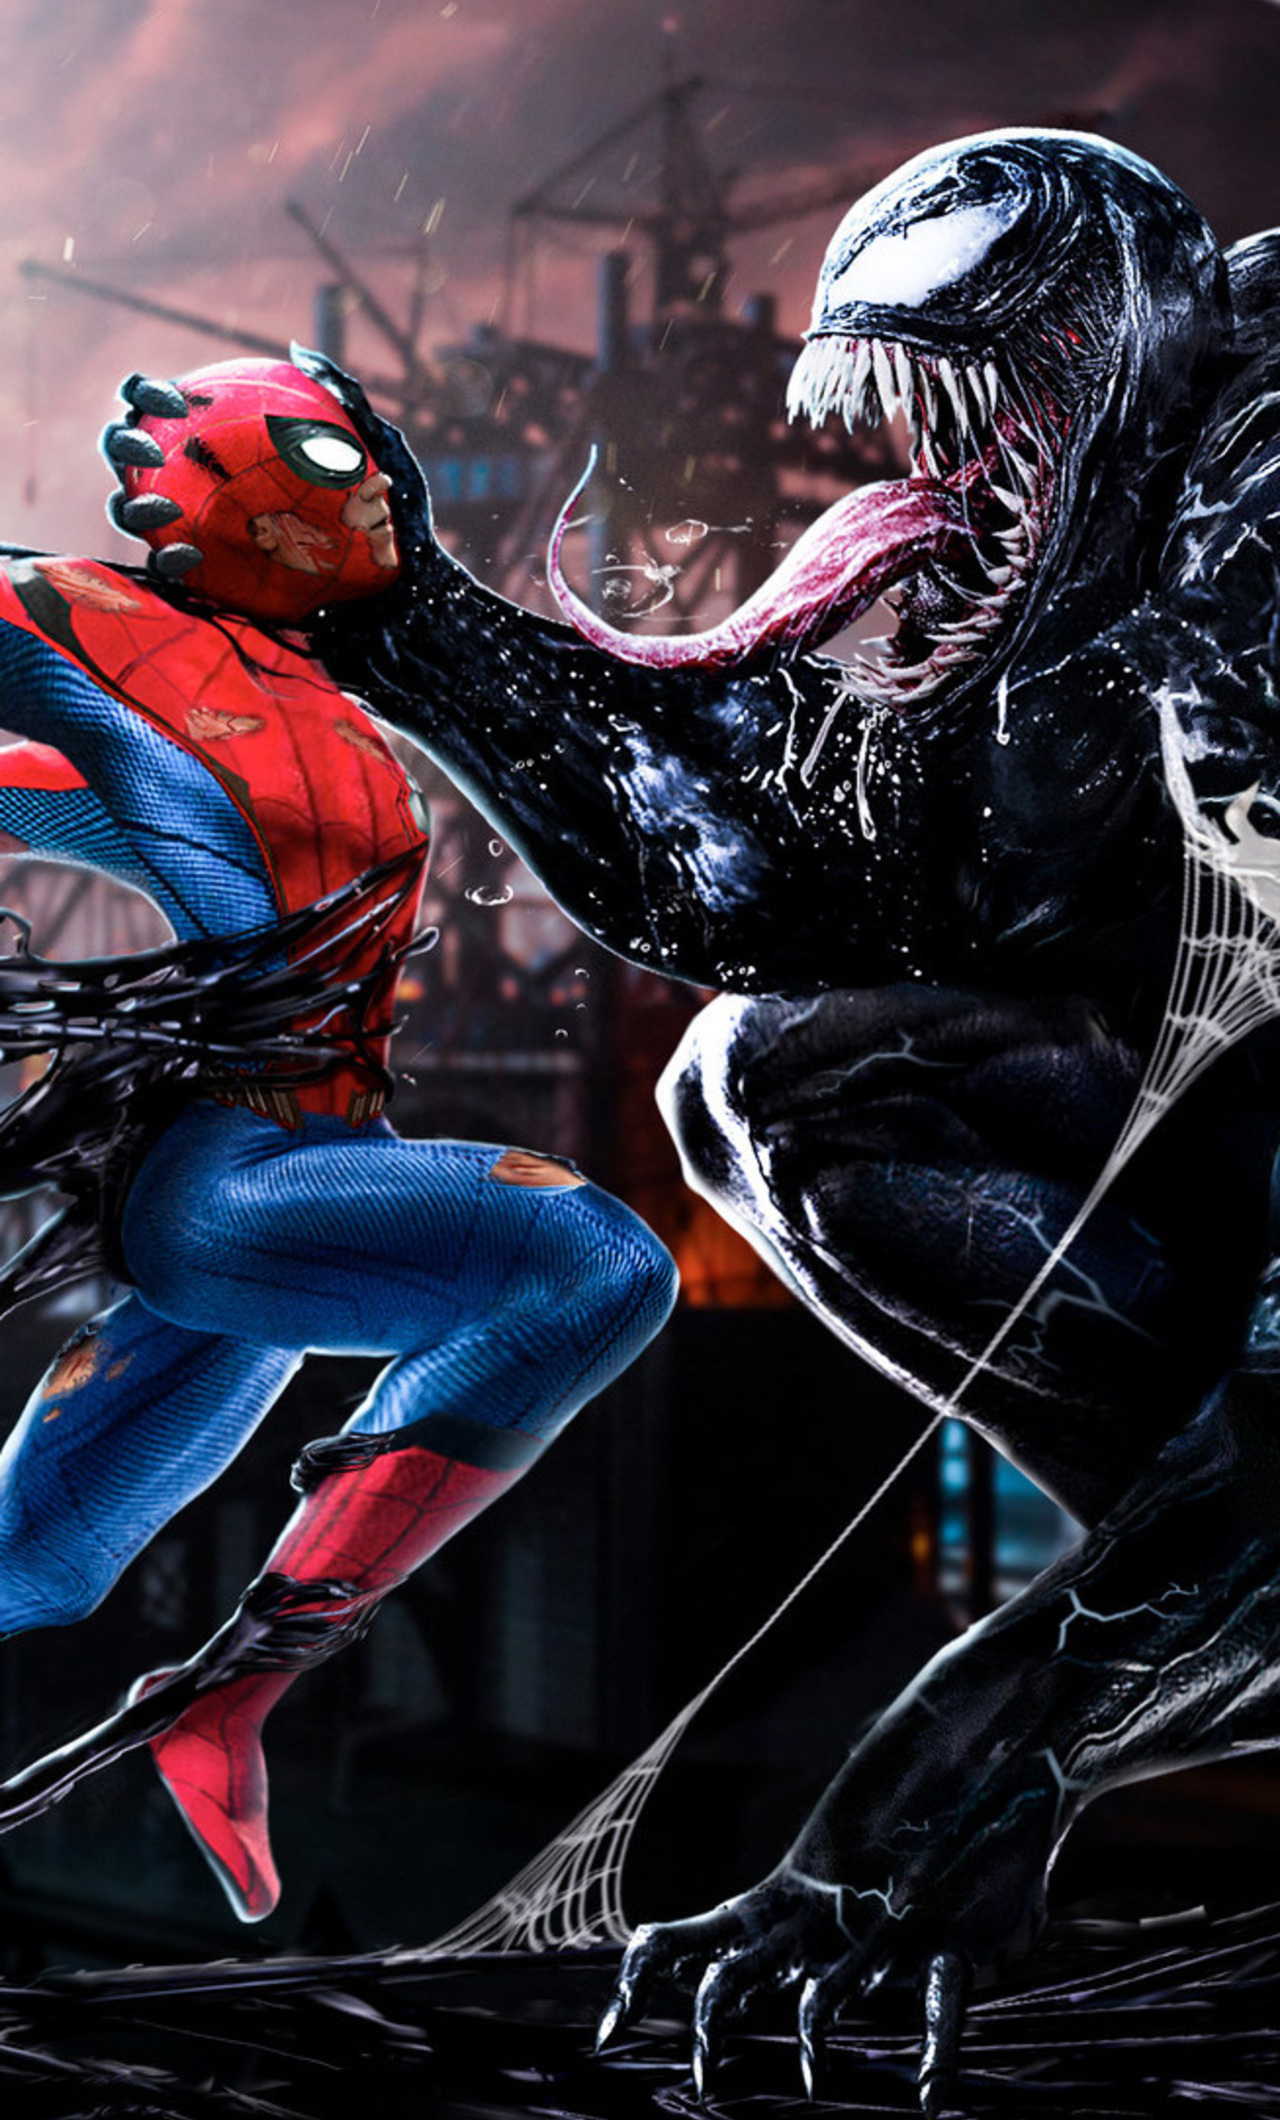 20+] Venom And Spider-Man Desktop Wallpapers - WallpaperSafari